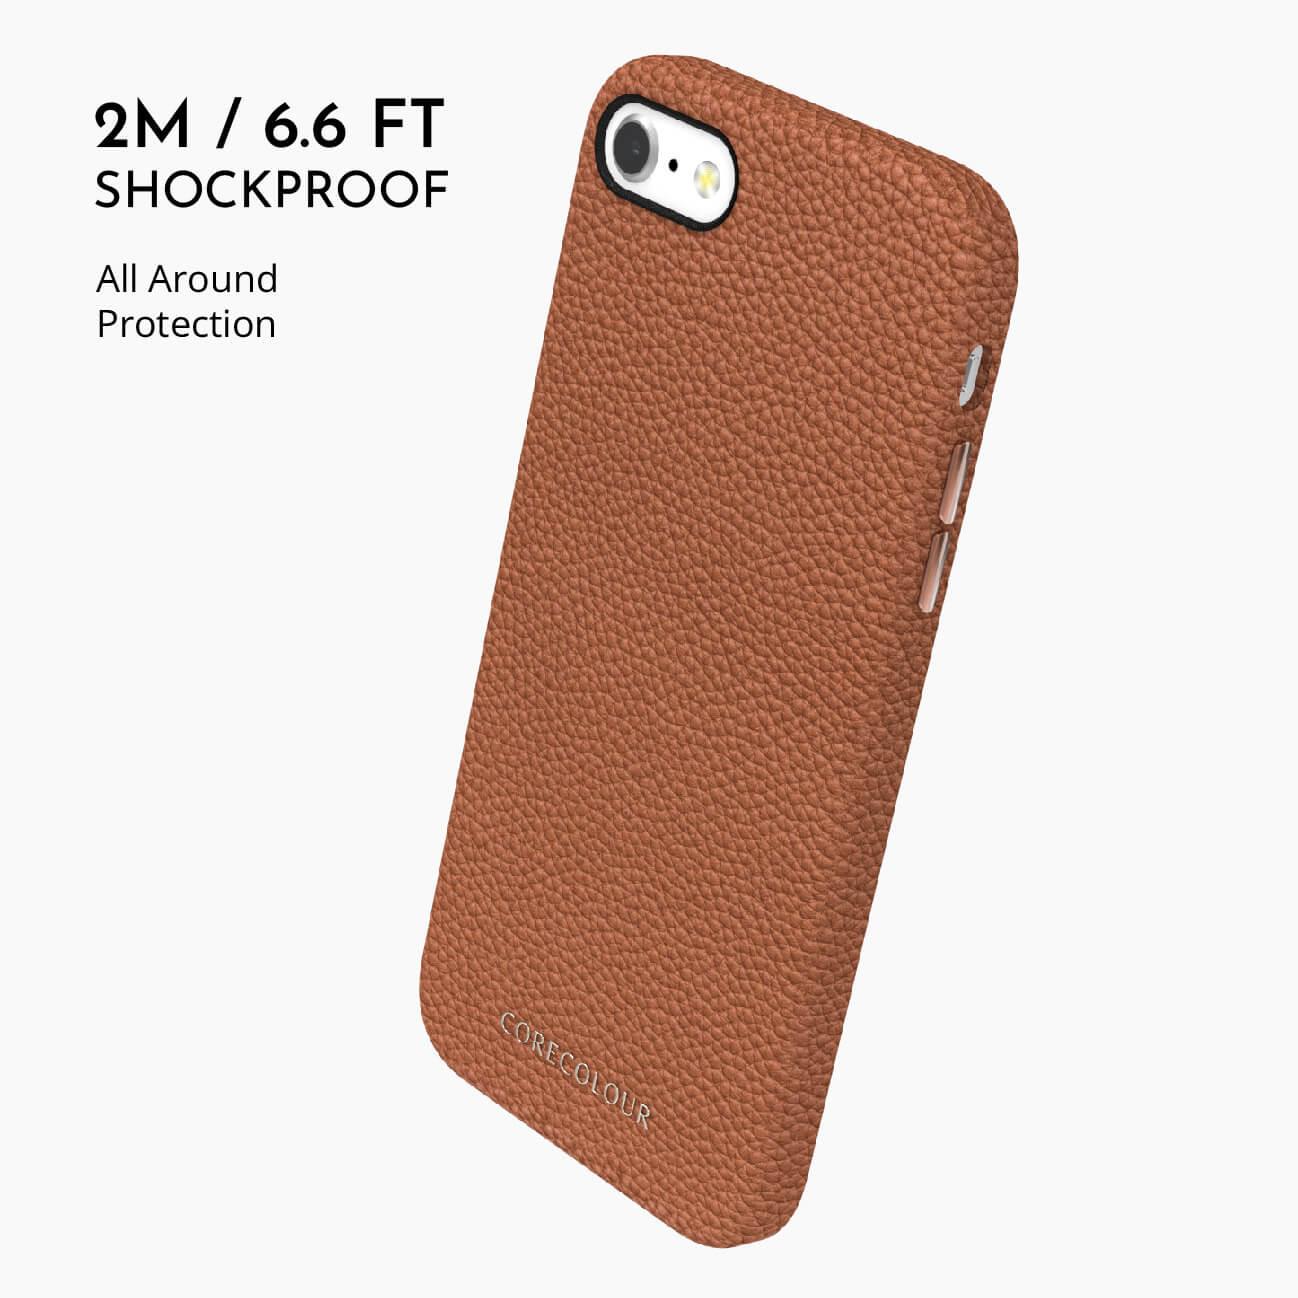 iPhone SE 2020 Brown Premium Leather Phone Case - CORECOLOUR AU